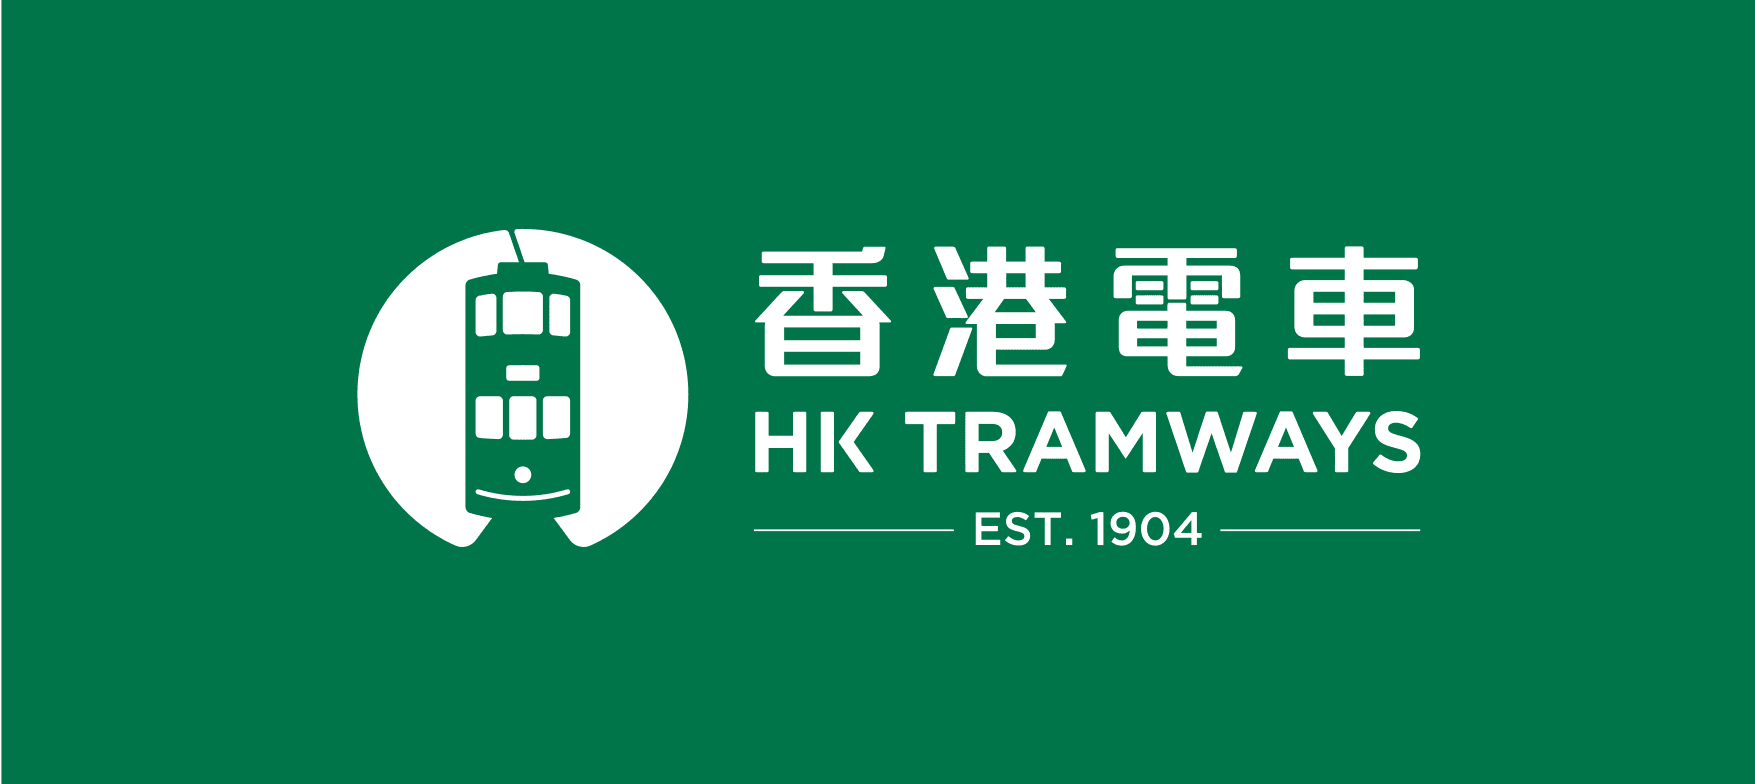 HK_Tramways 横幅